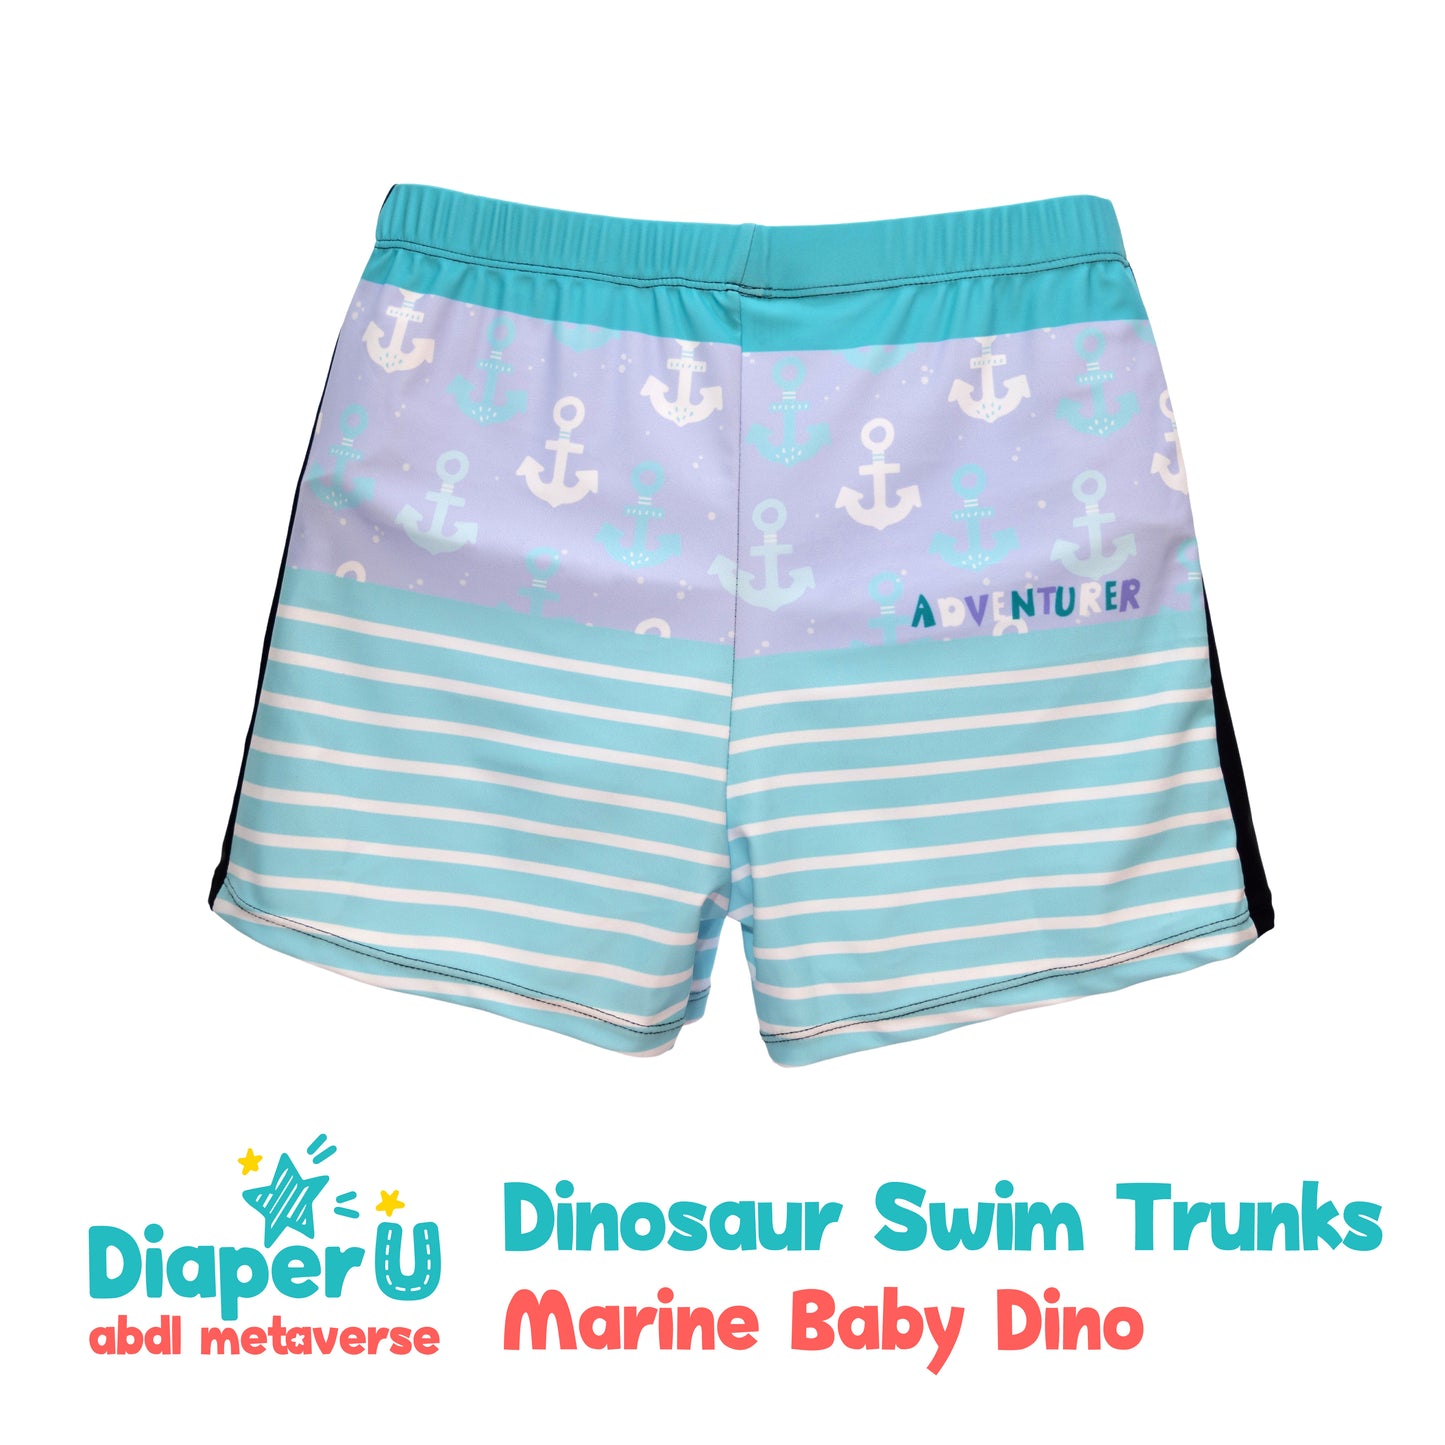 ABDL Dinosaur Swim Trunks - Marine Baby Dino